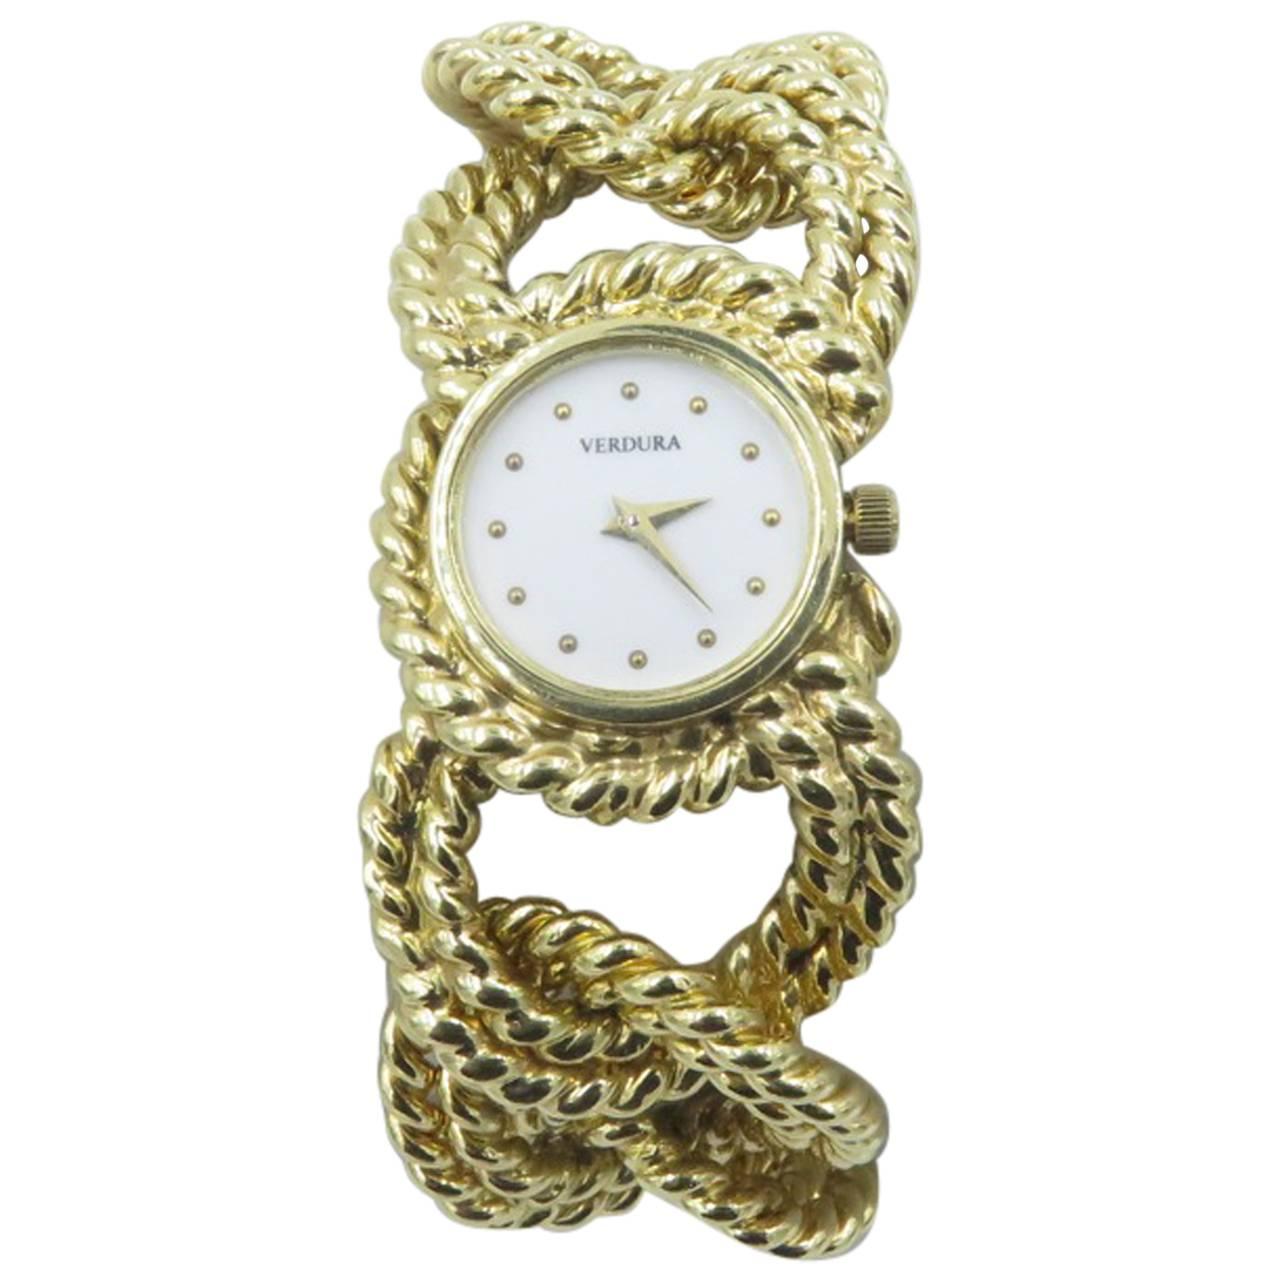 VERDURA Gold Rope LInk Bracelet Watch.